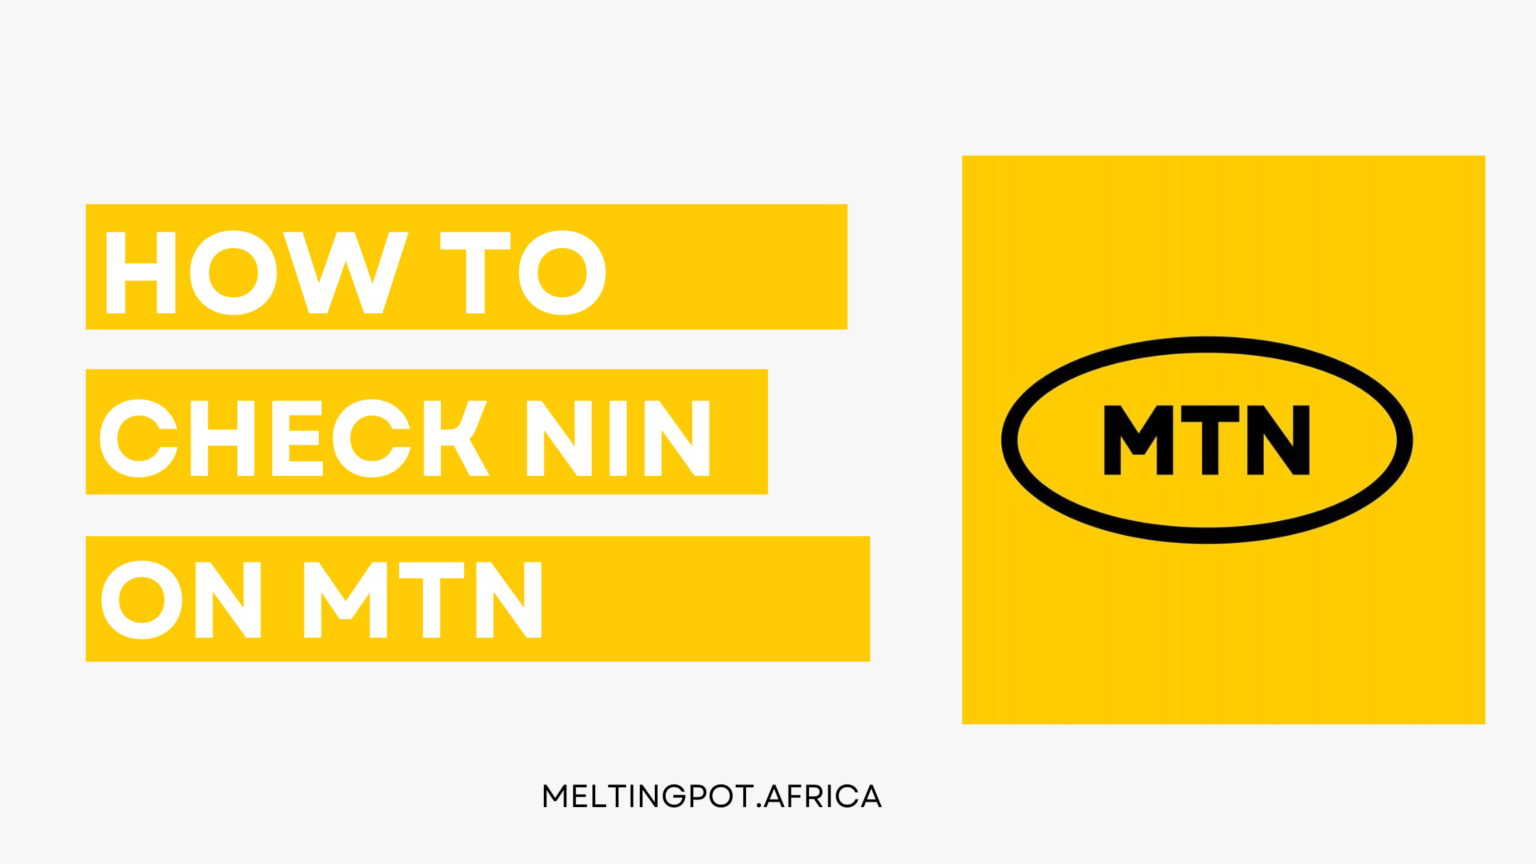 How To Check NIN On MTN